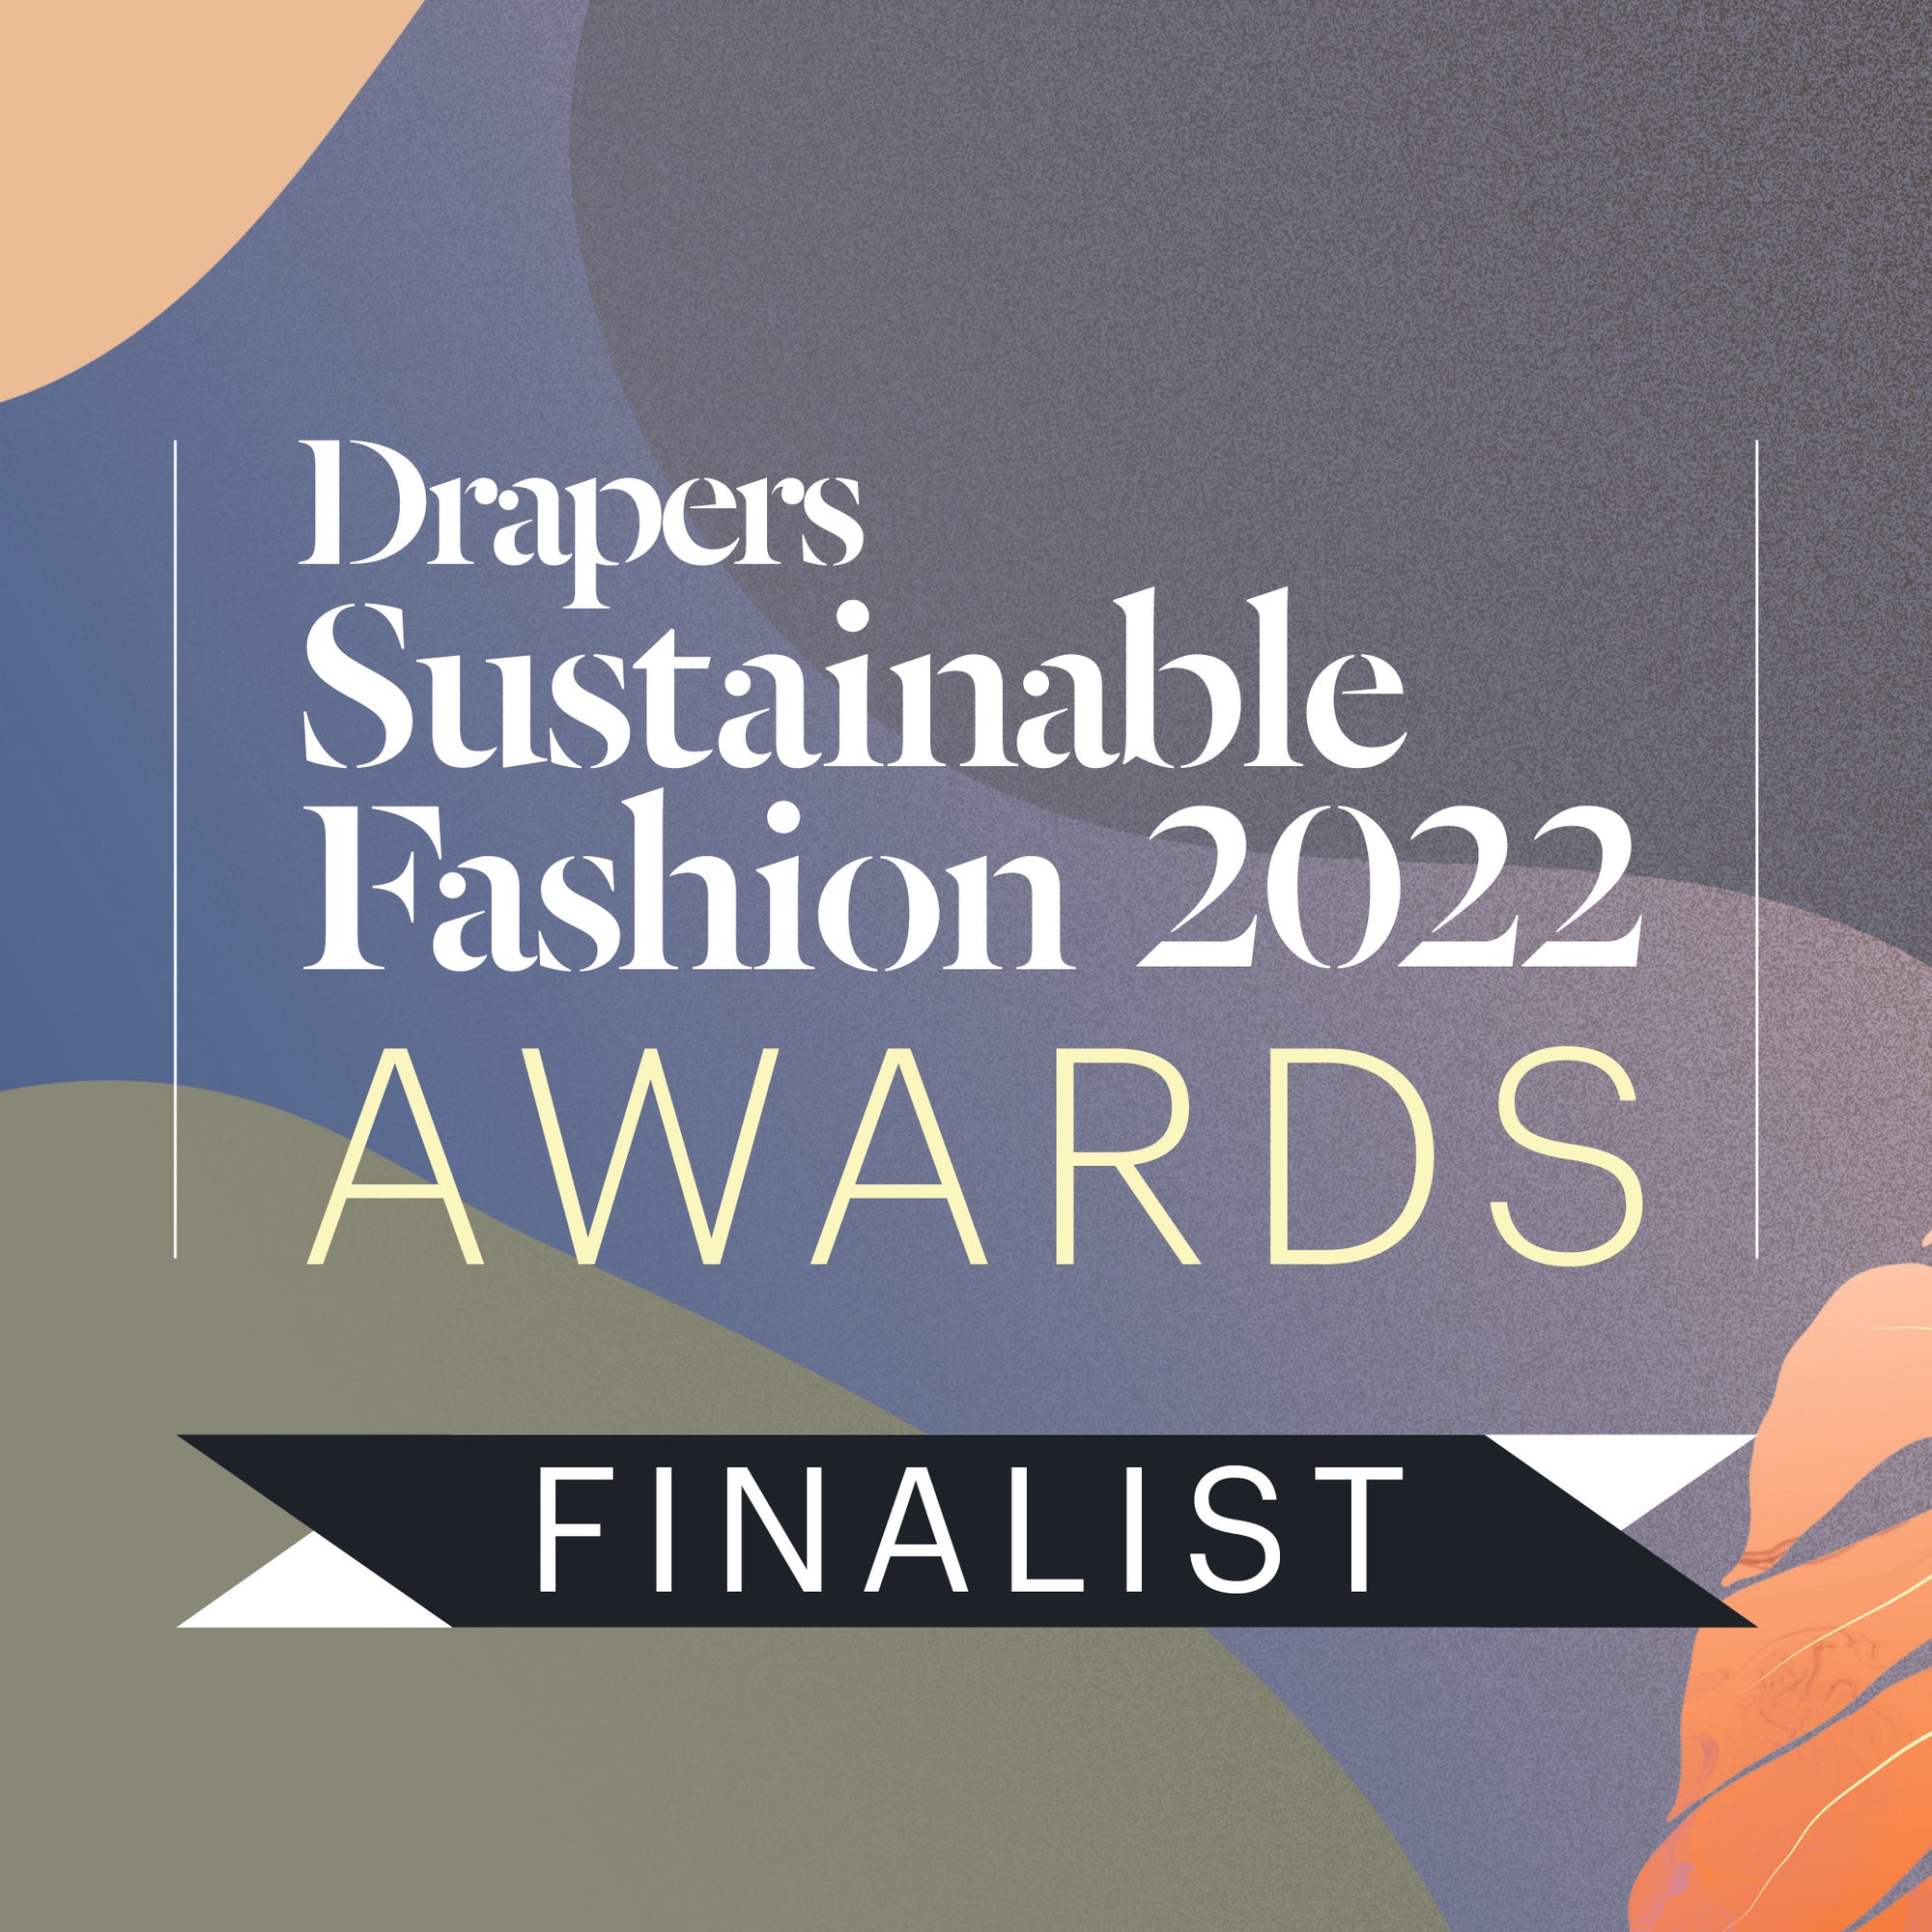 warrior addict award drapers sustainable fashion 2022